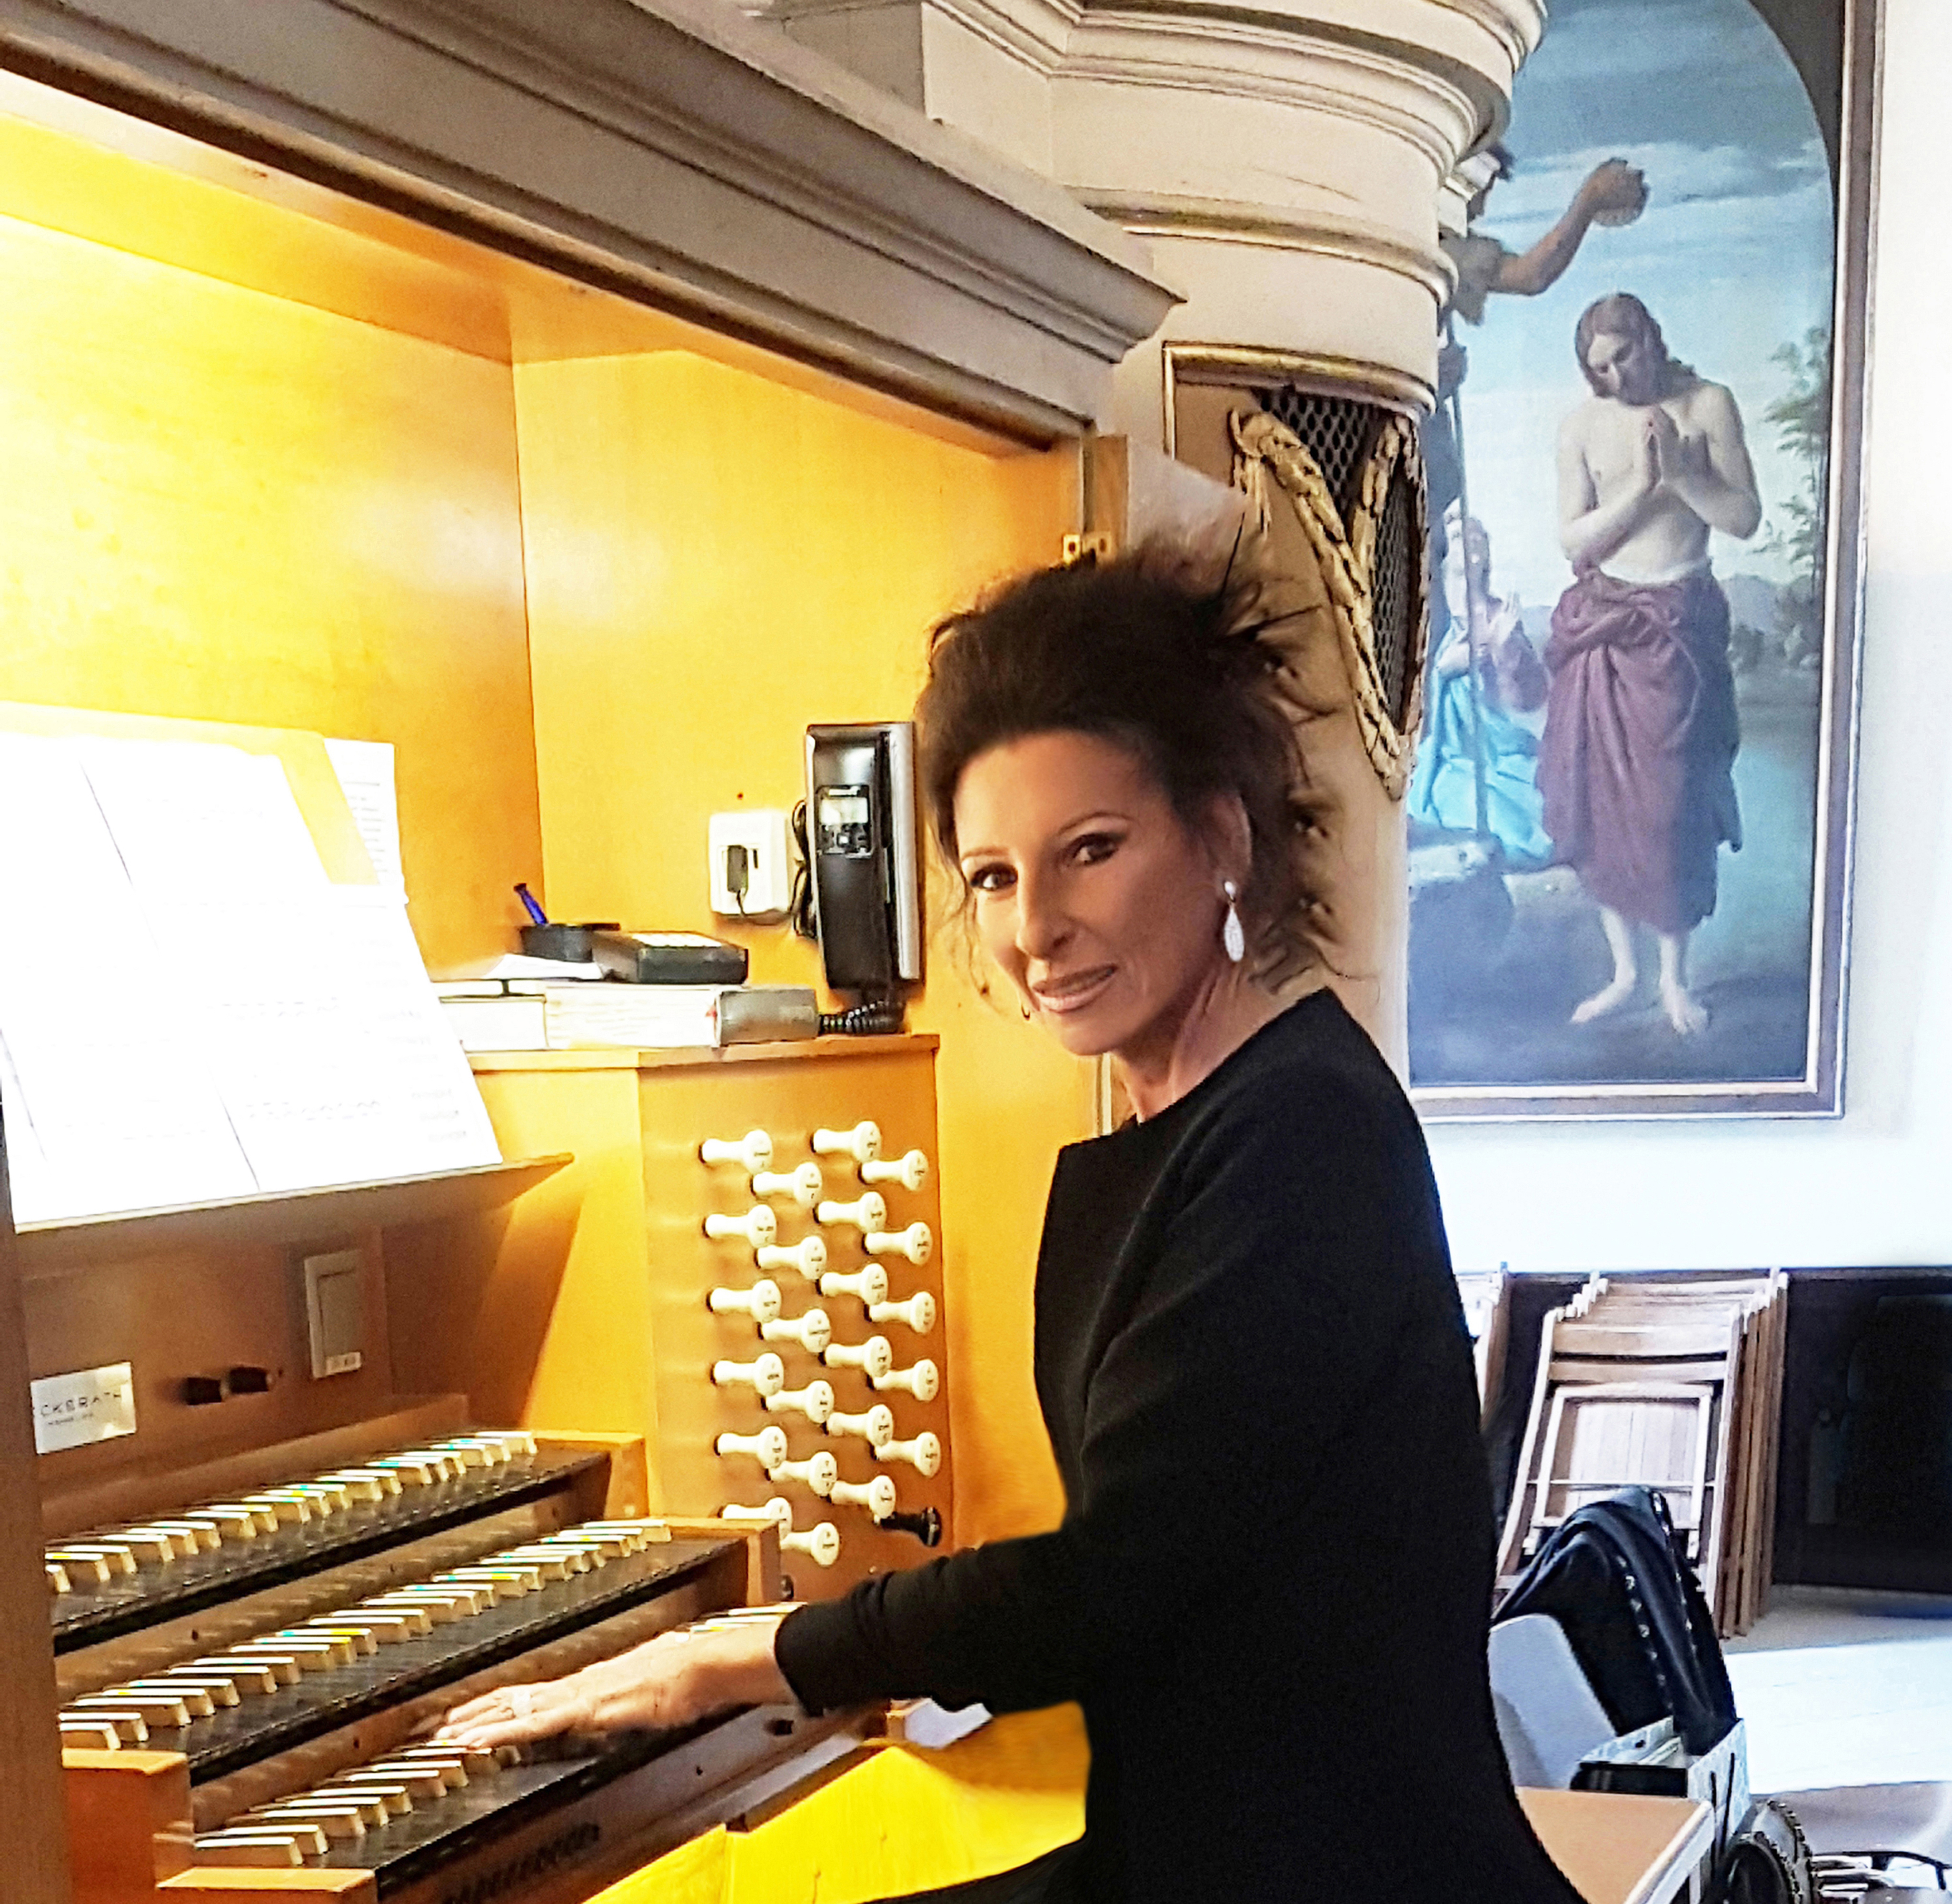 Lucia Aliberti⚘Lucia plays the Organ⚘St.Andreas Church⚘a jewel of the German Baroque⚘Special Concert⚘Sacred Music⚘Dusseldorf⚘Armani Fashion⚘:http://www.luciaaliberti.it #luciaaliberti #standreaschurch #germanbaroque #sacredconcert #dusseldorf #organ #armanifashion